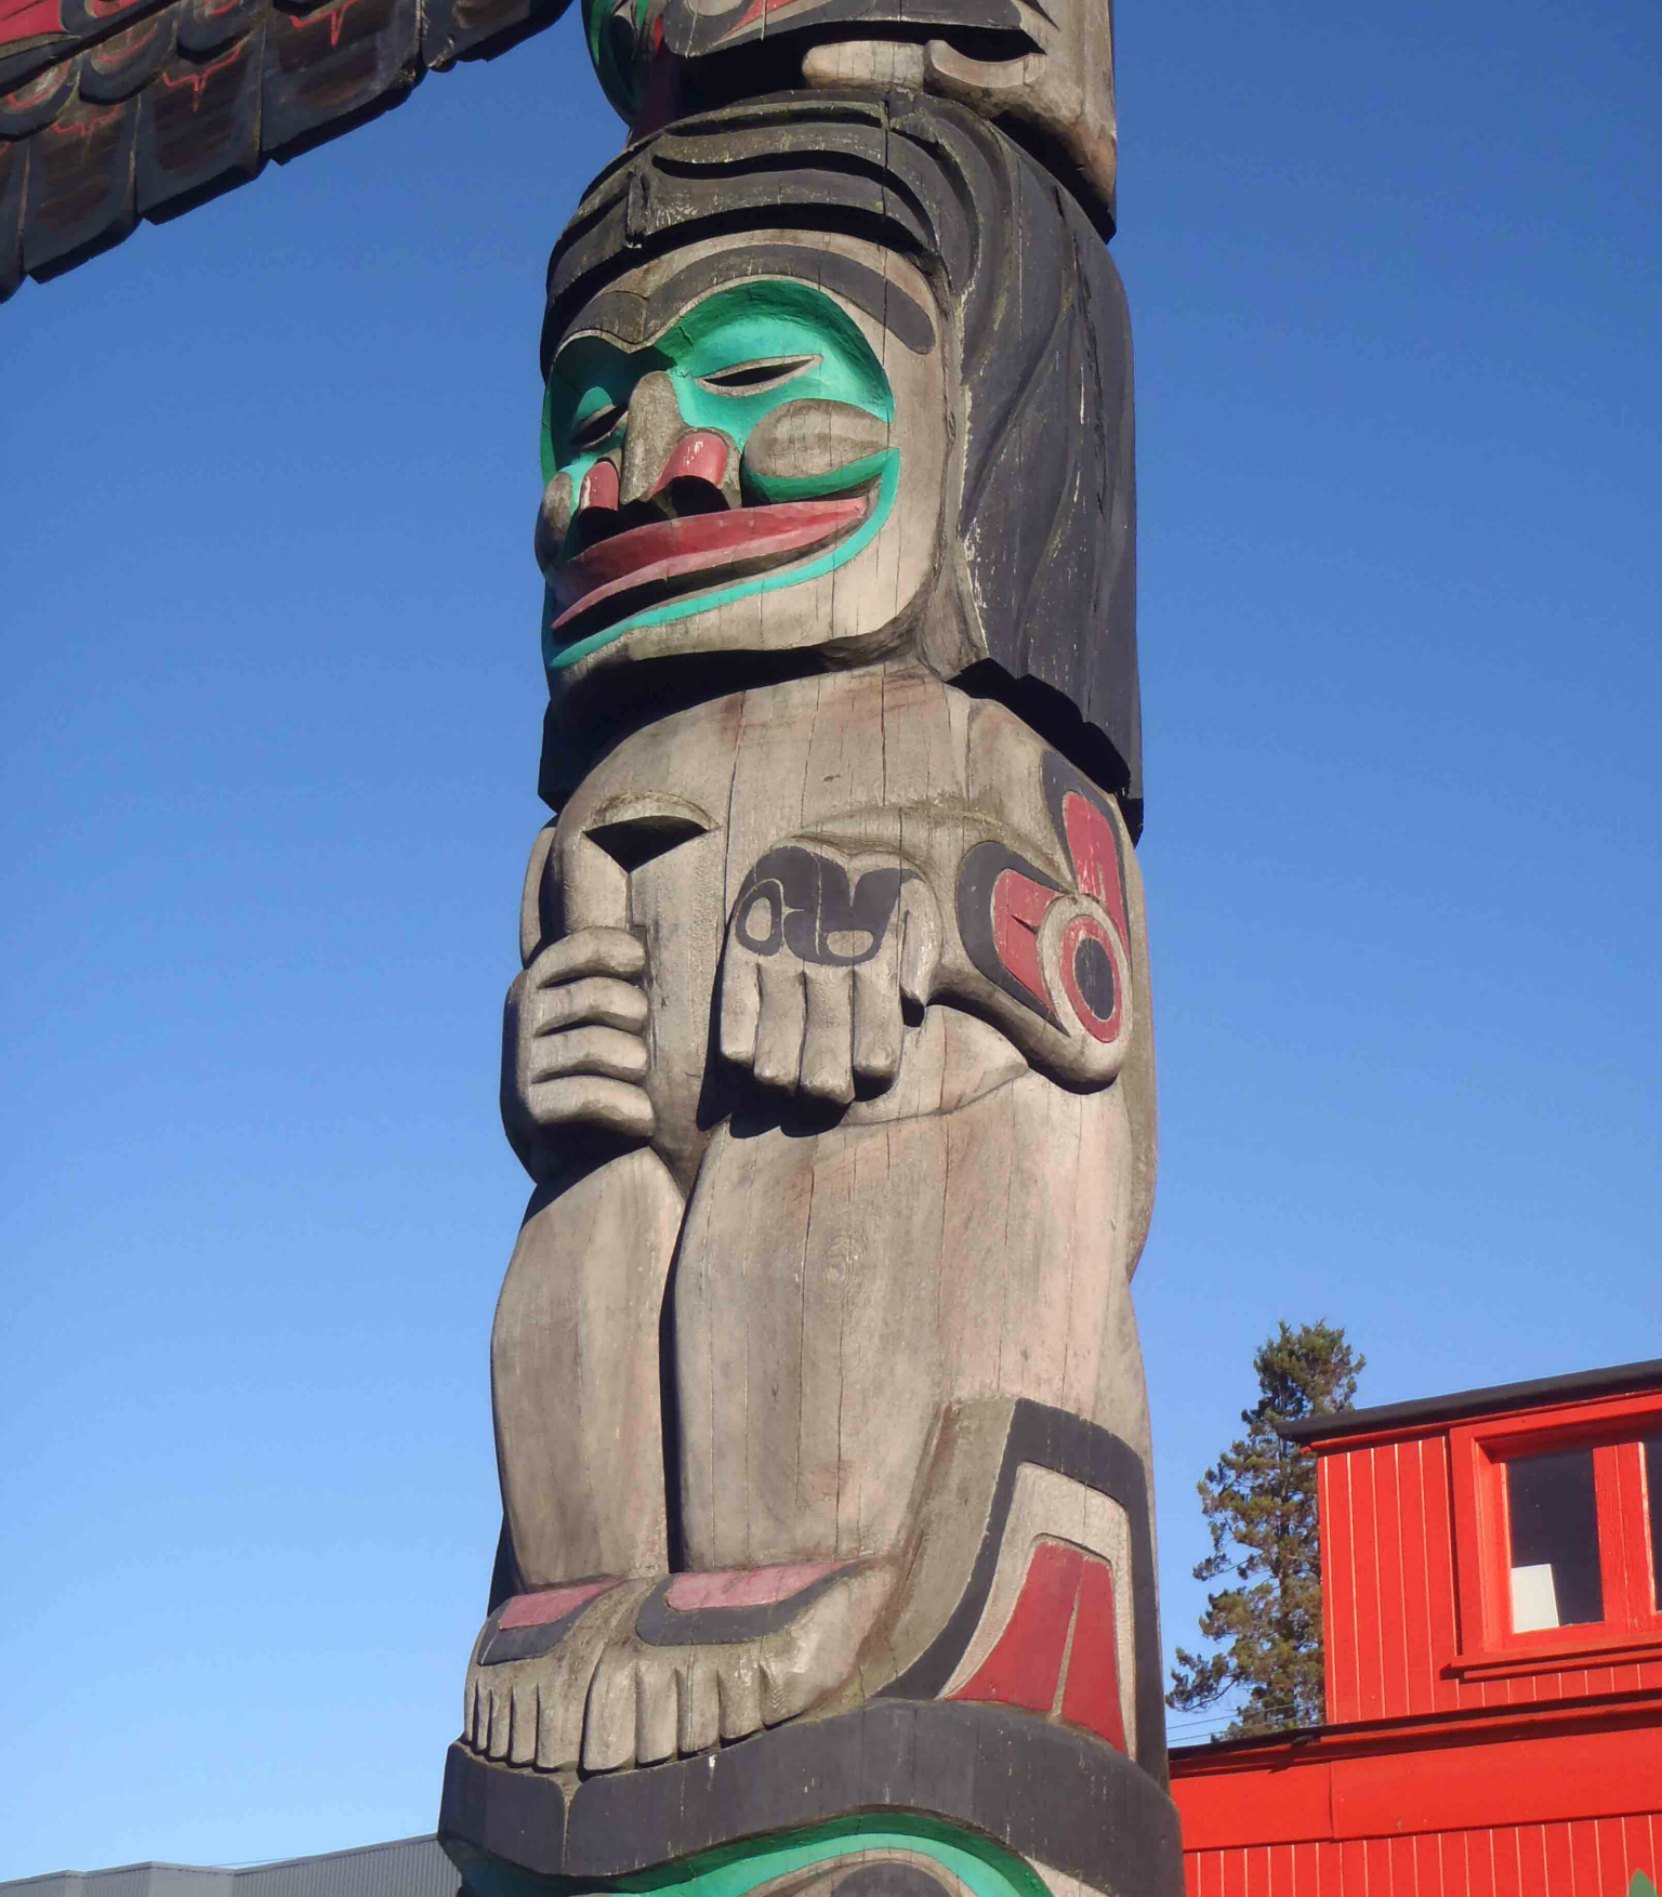 Raven's Gift totem pole, Man figure, Canada Avenue, Duncan, B.C.